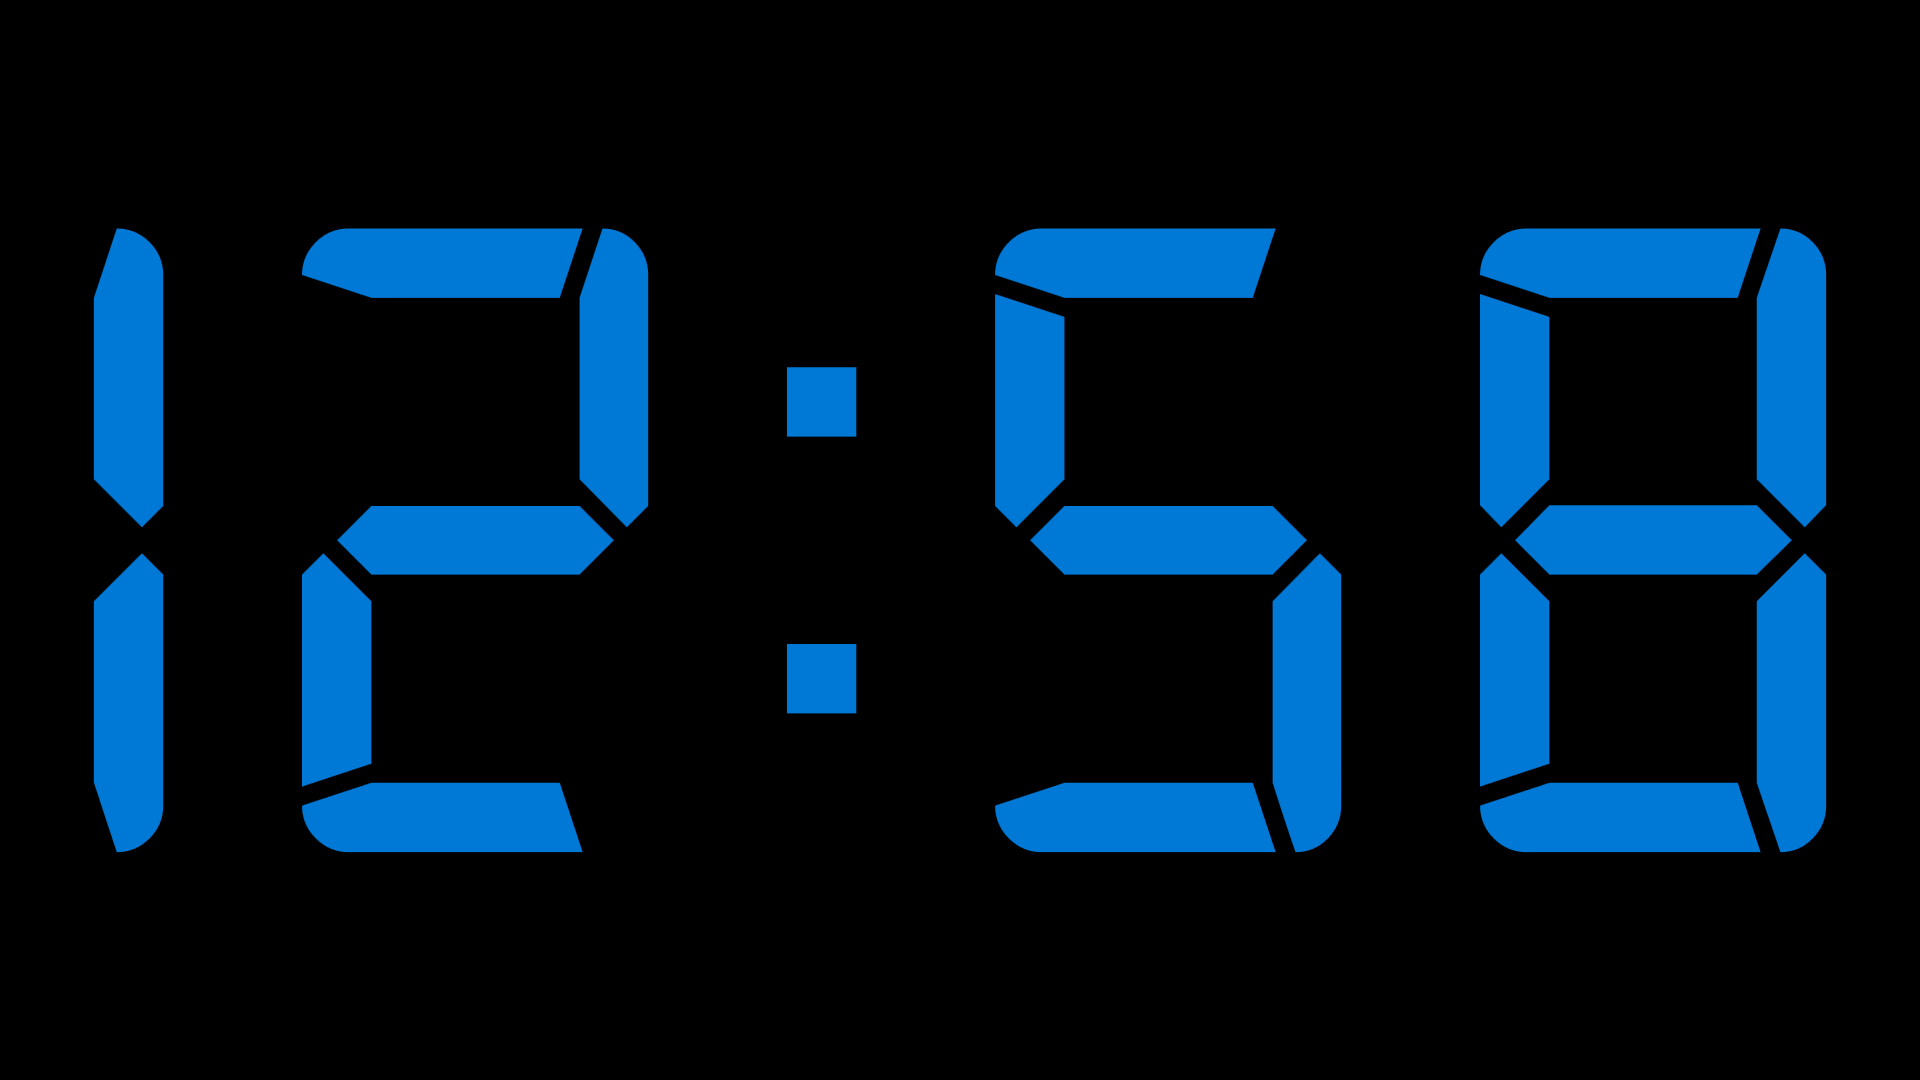 Установка экрана на часы. Часы Digital Clock 200730138828.4. Цифровые часы на экран. Скринсейвер электронные часы. Большие электронные часы.